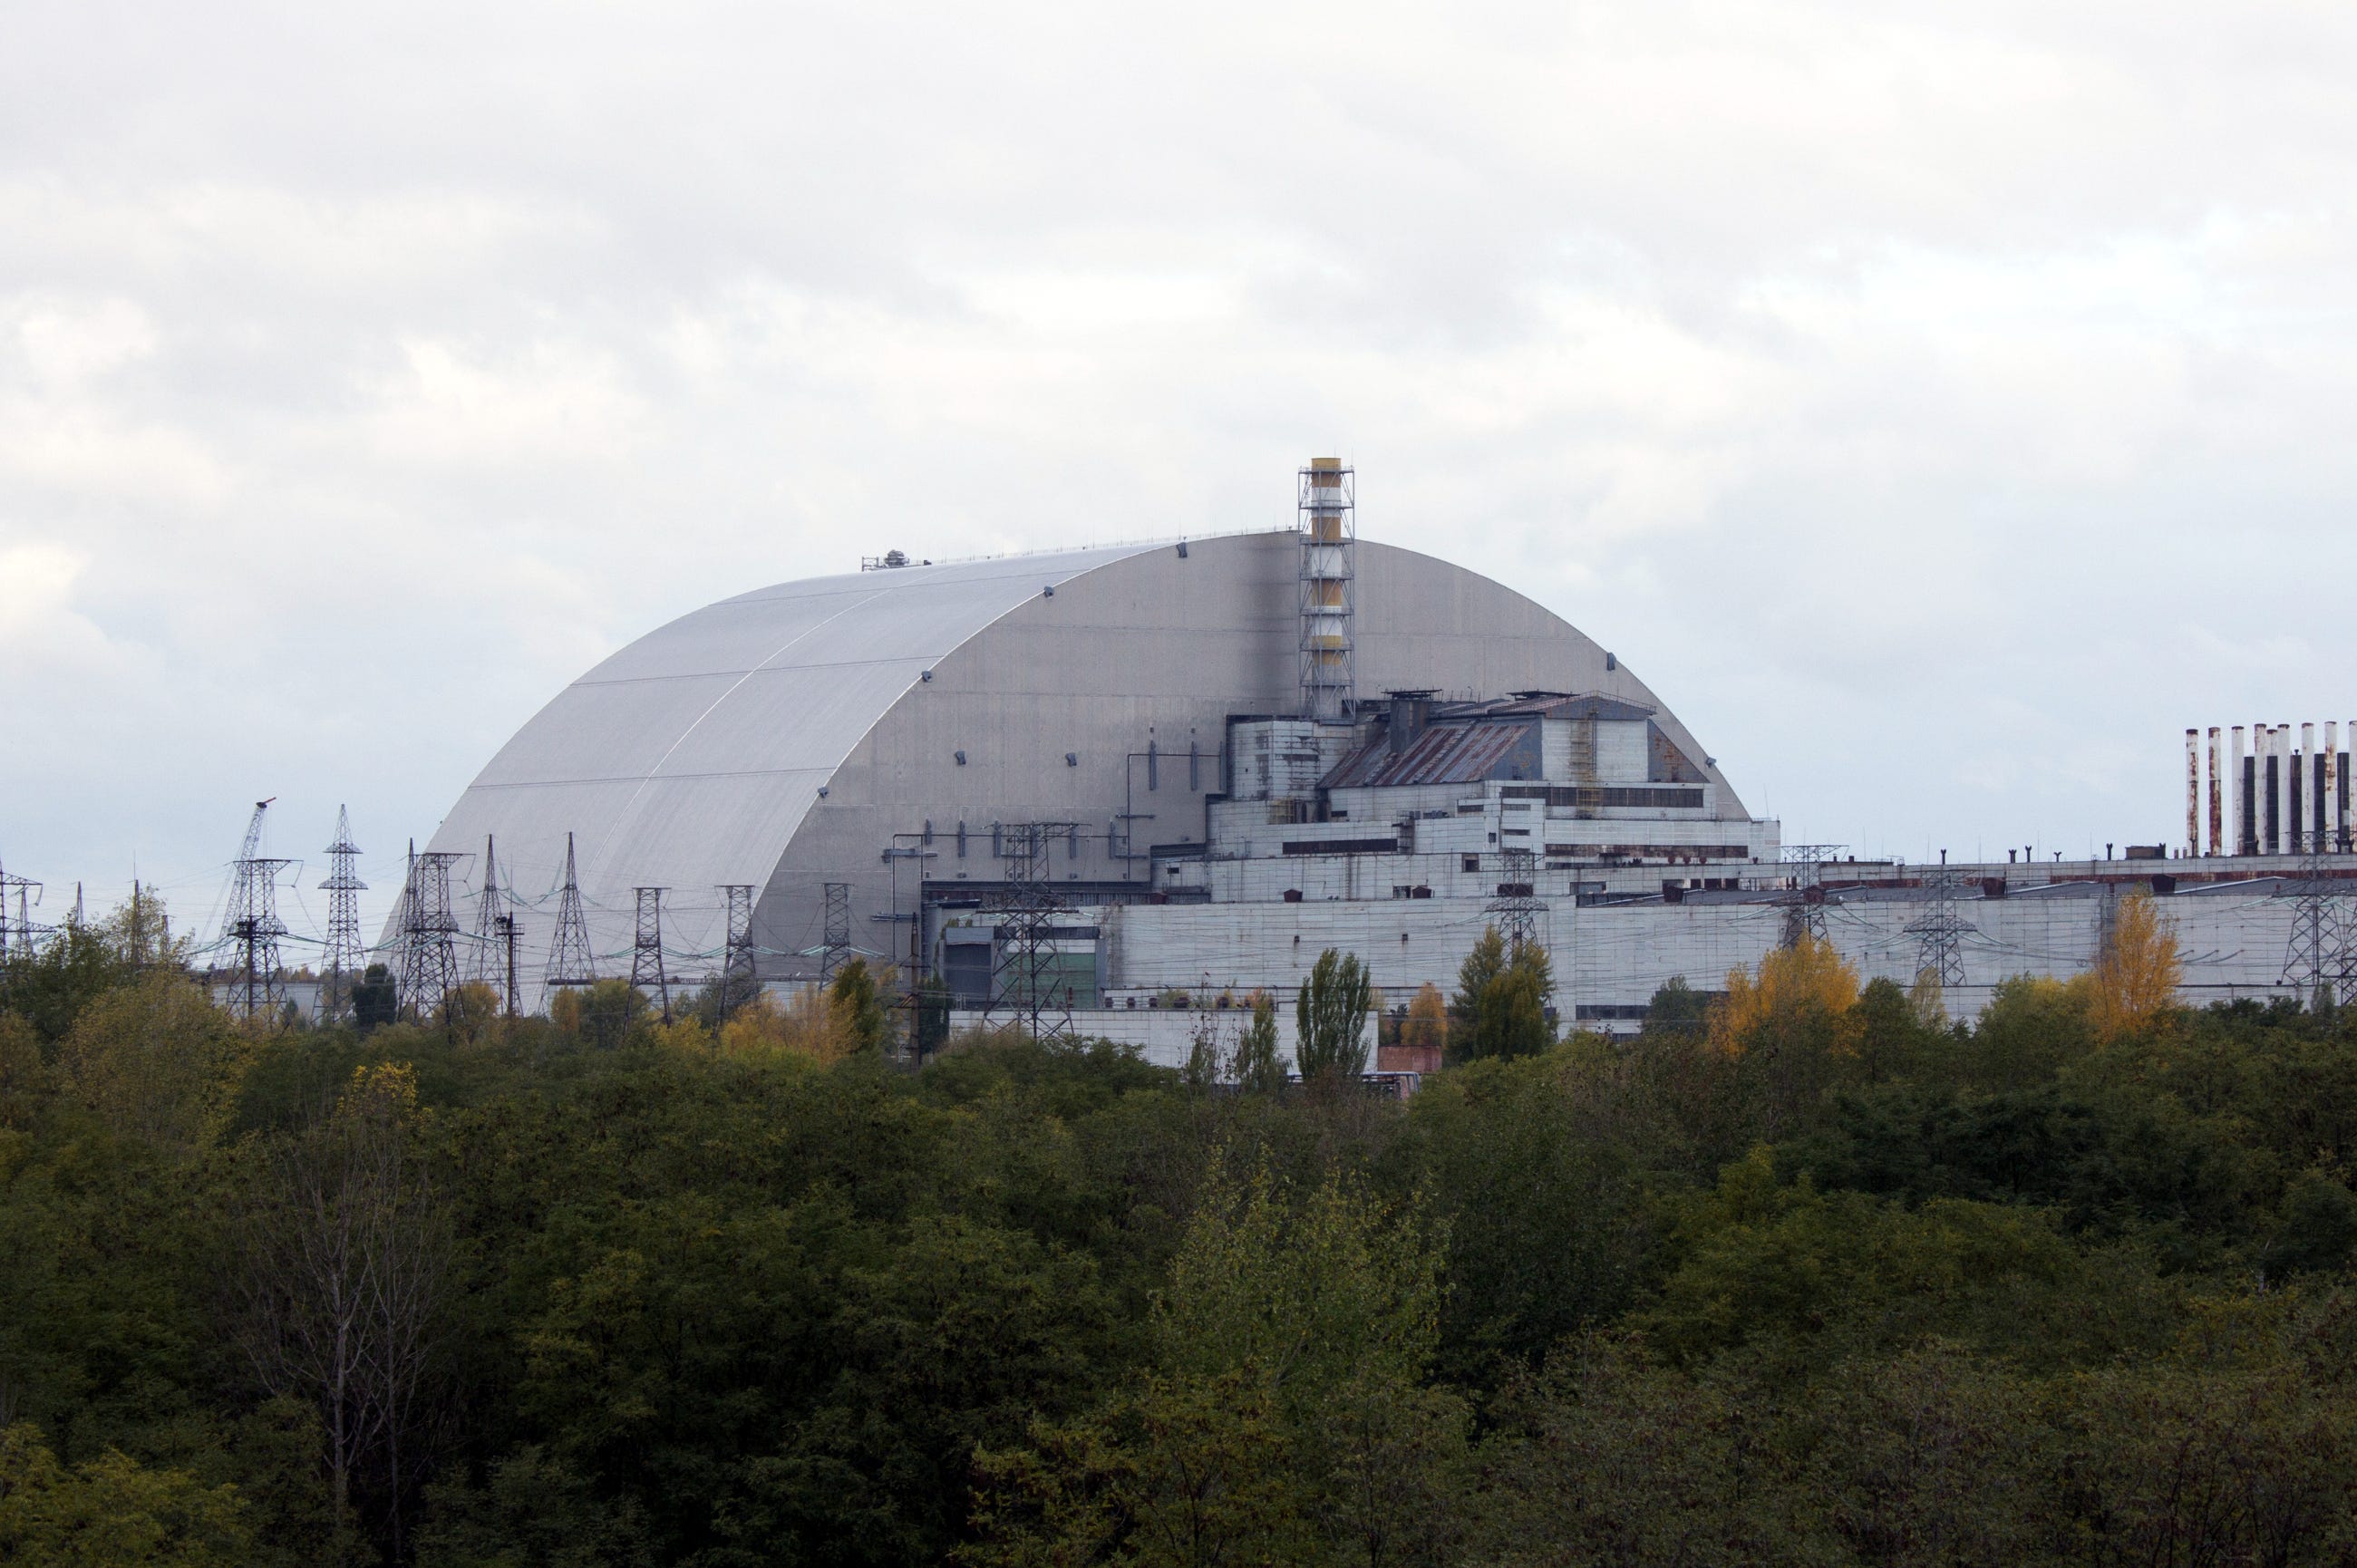 Novo invólucro de proteção do reator 4. [Fonte: Wikipedia](https://en.wikipedia.org/wiki/Chernobyl_disaster#/media/File:NSC-Oct-2017.jpg).